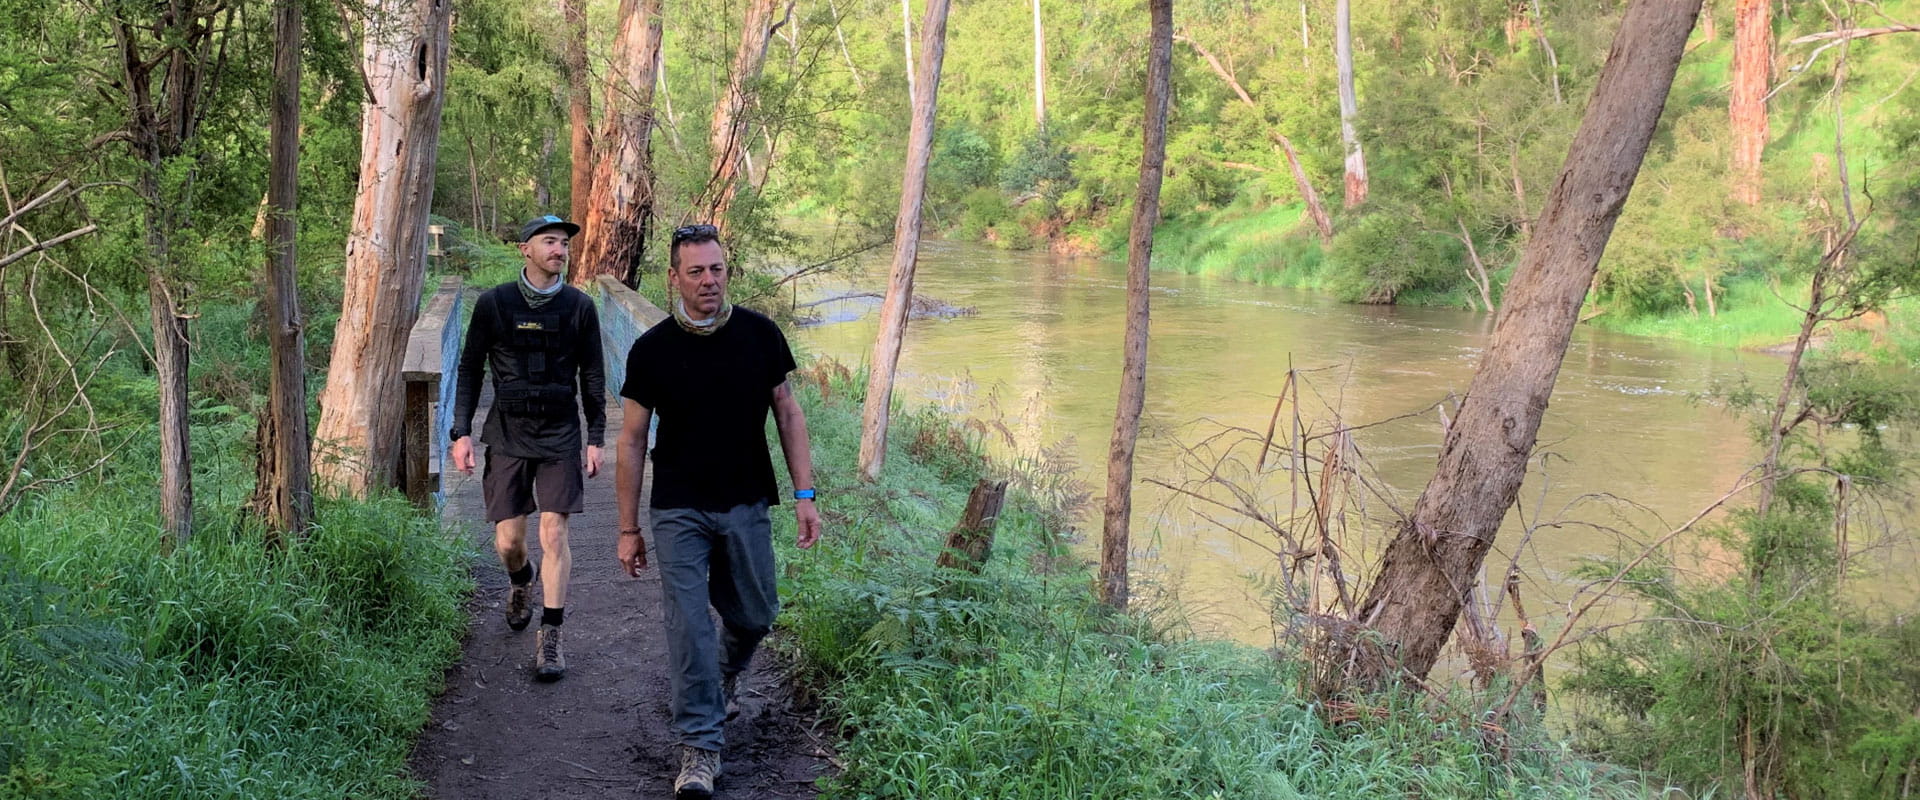 Two men walk alongside a deep green fast flowing river in lush green parkland